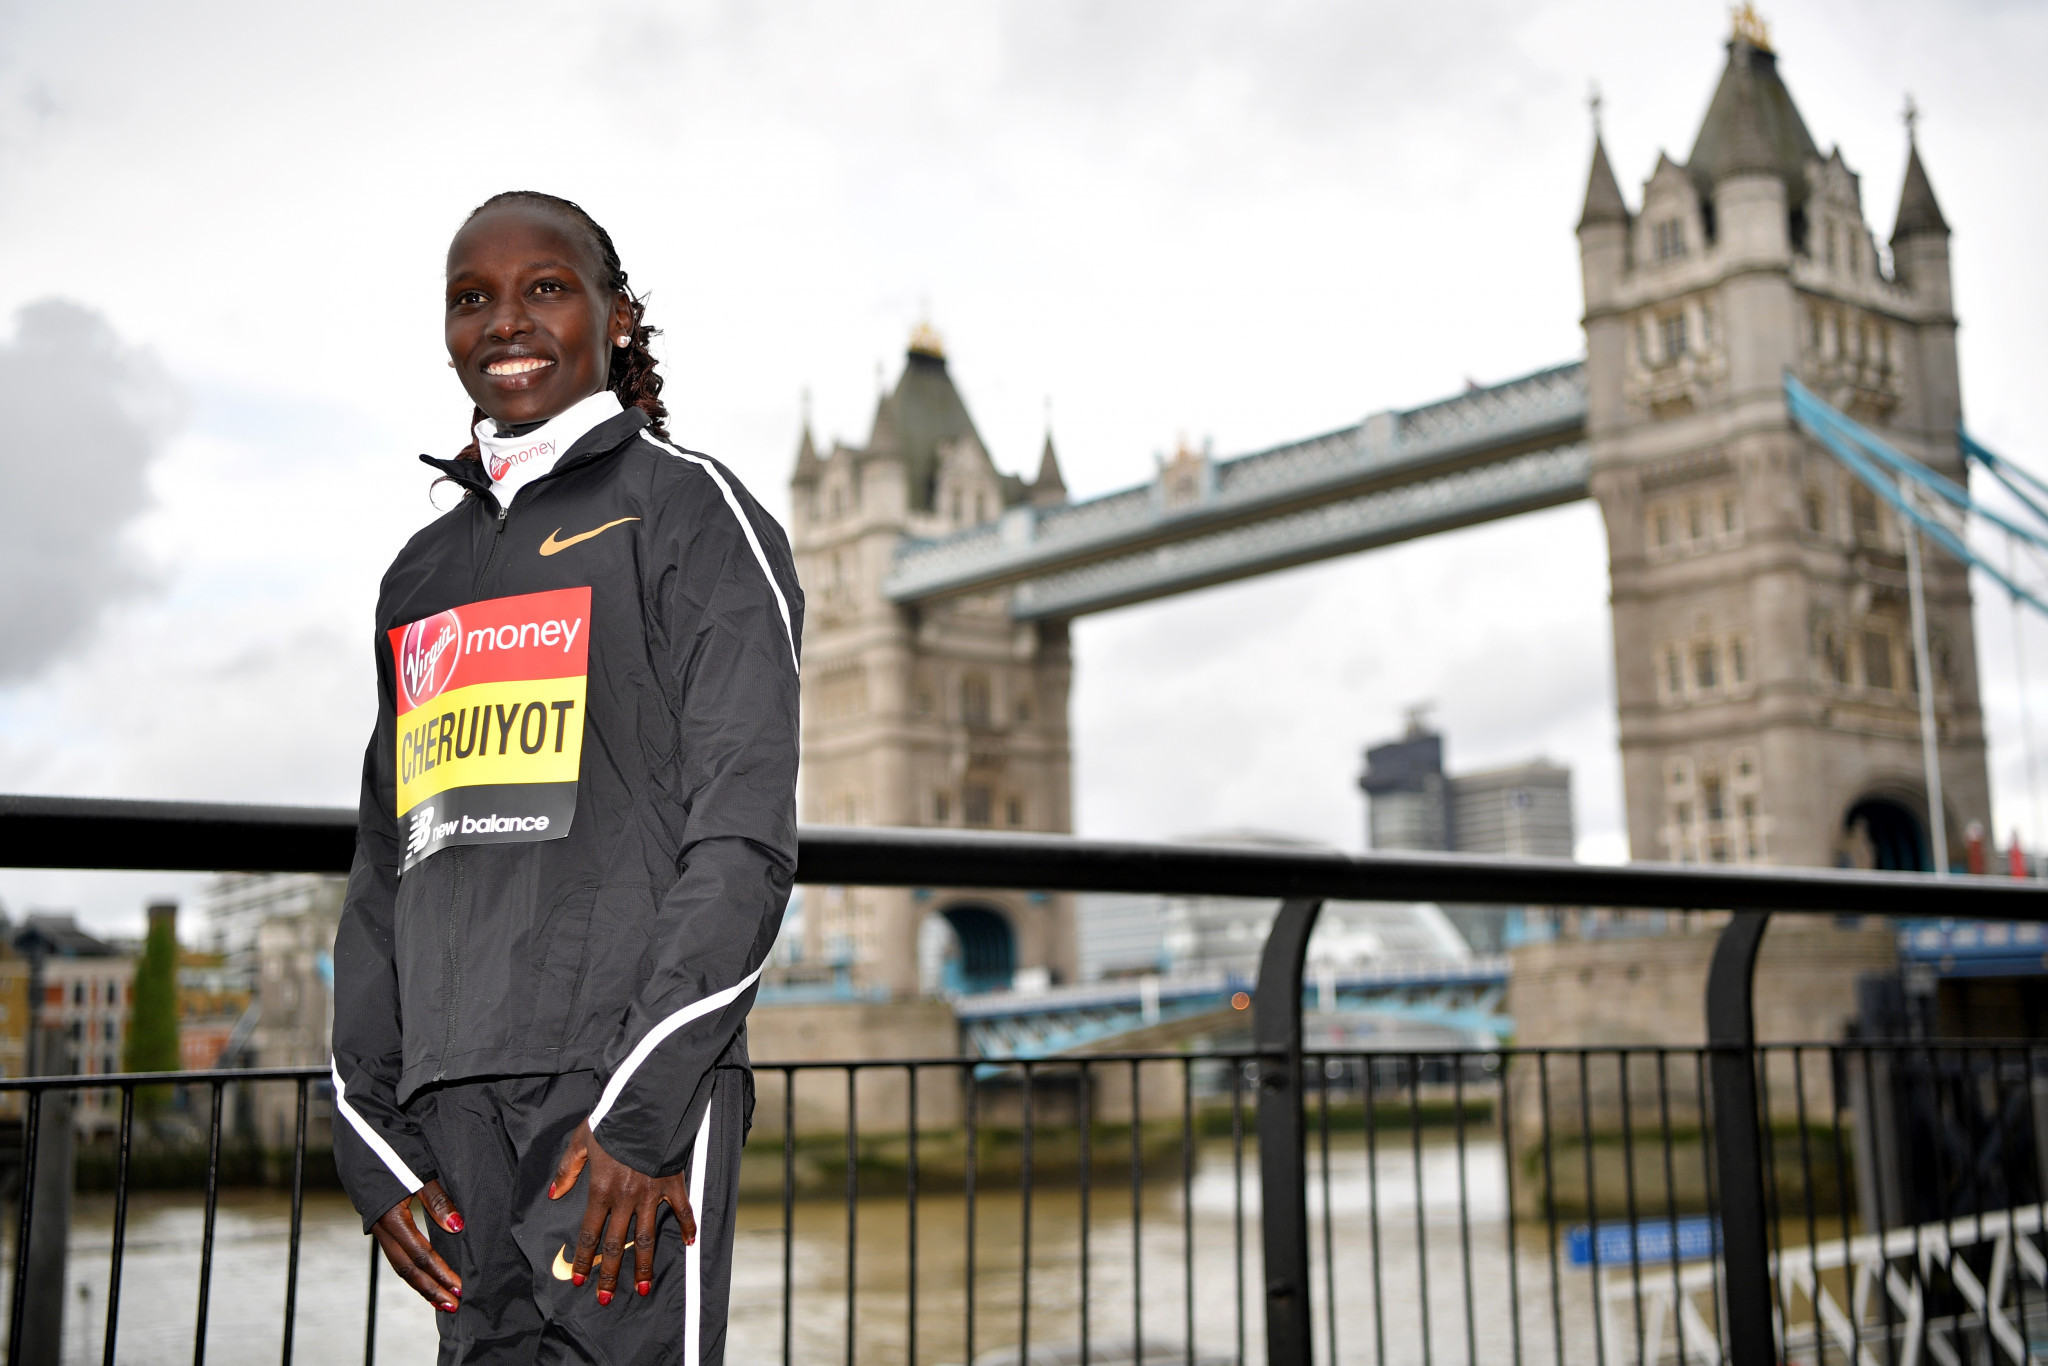 Cheruiyot targets personal best as Kenyan prepares for London Marathon title defence